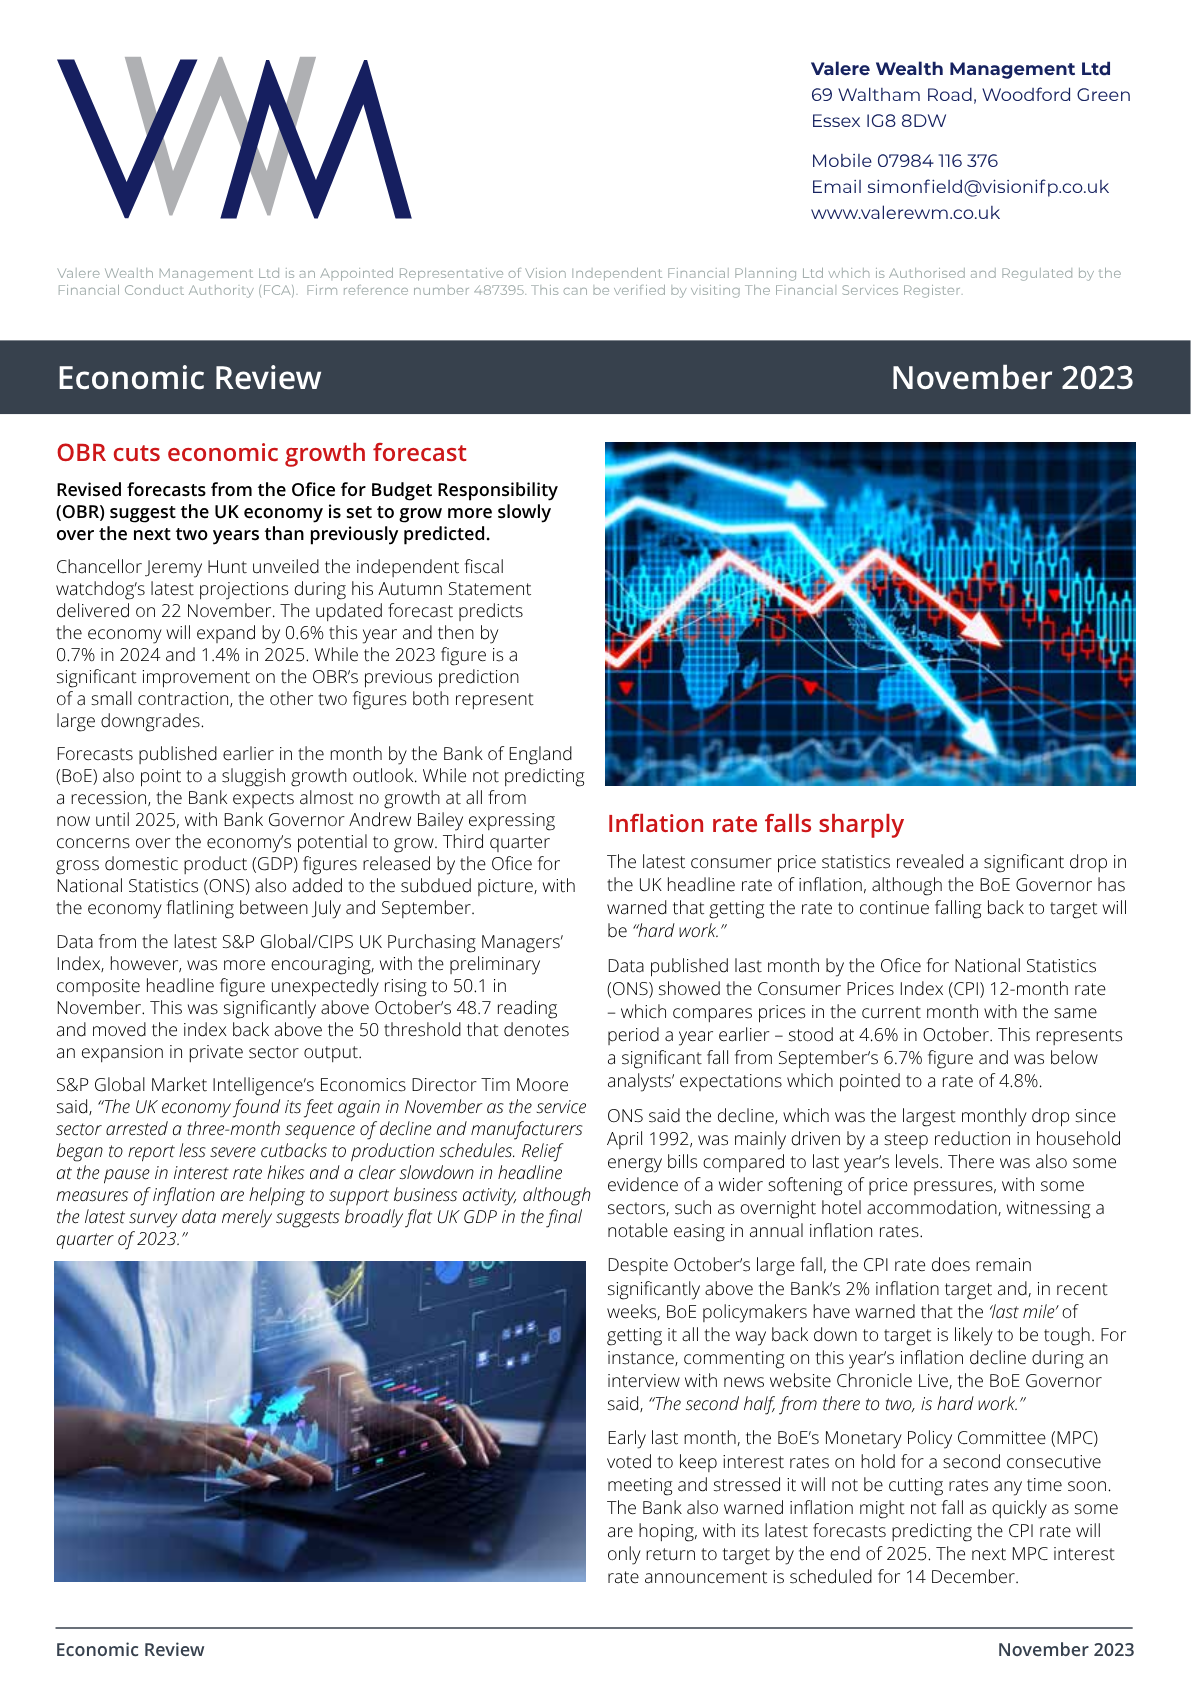 Economic Review July 2022